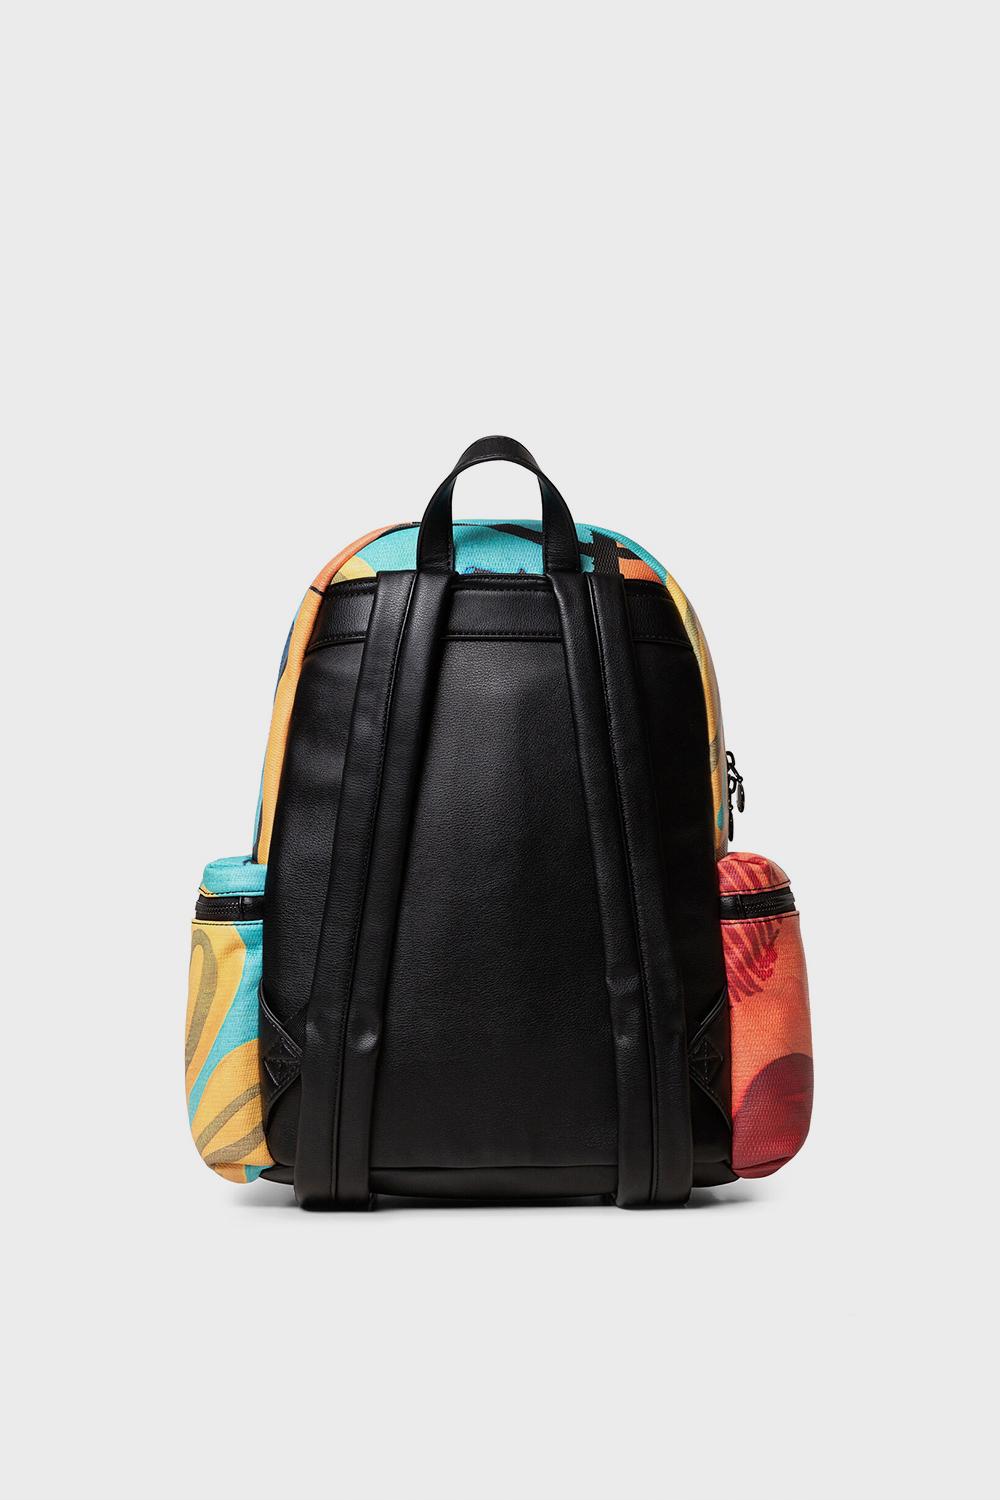 Color studs backpack